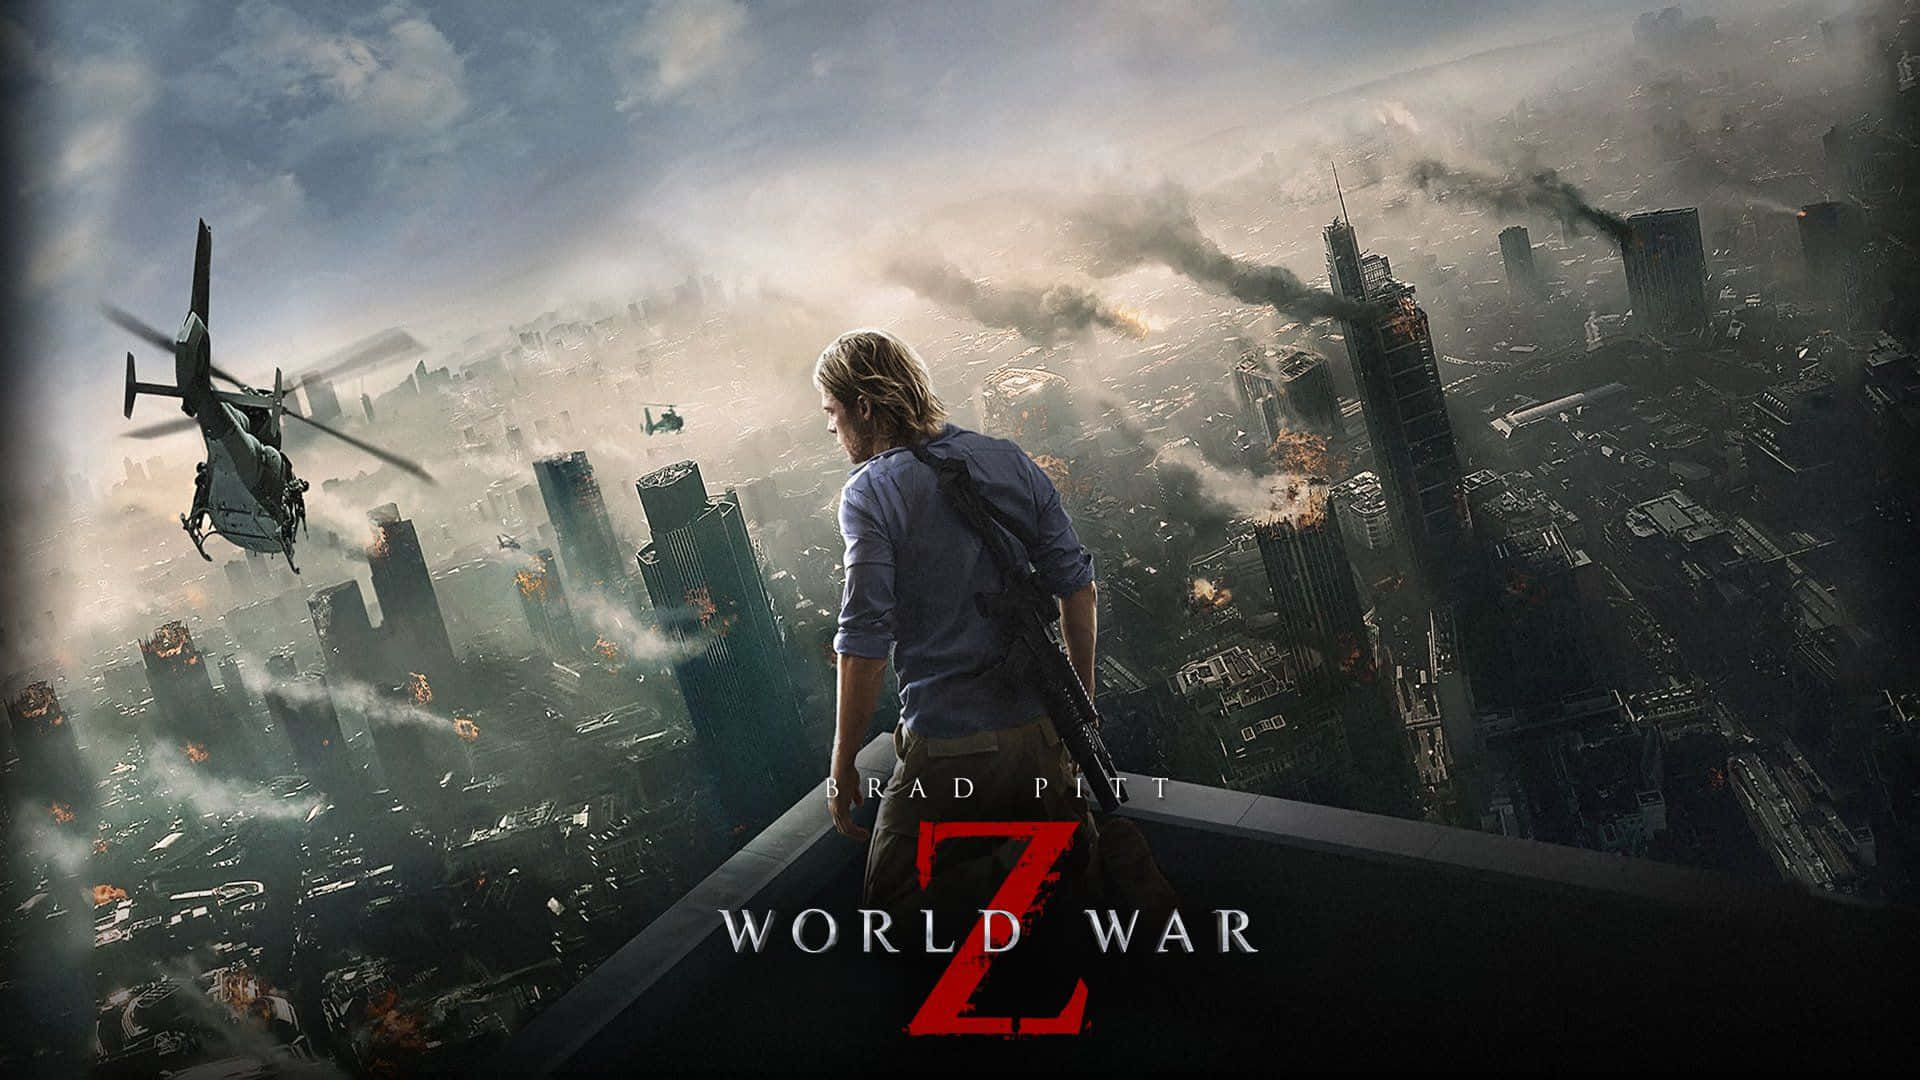 Brad Pitt leads a fight against a zombie apocalypse in World War Z.